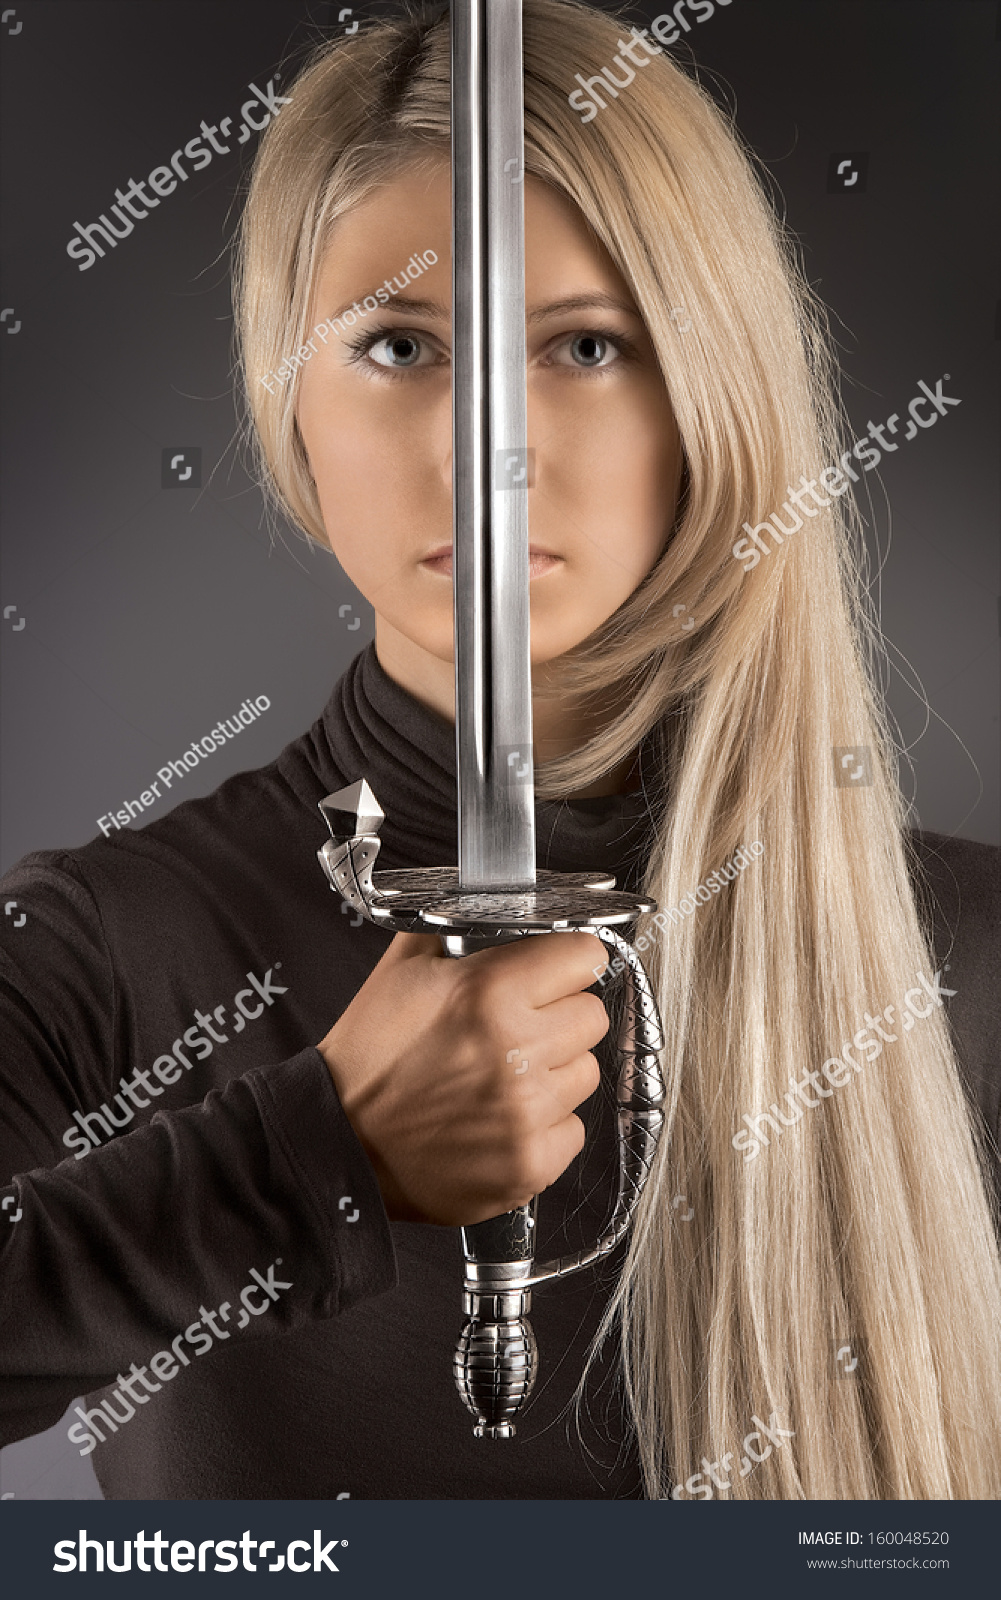 Girl Holding Sword Images Stock Photos Vectors Shutterstock